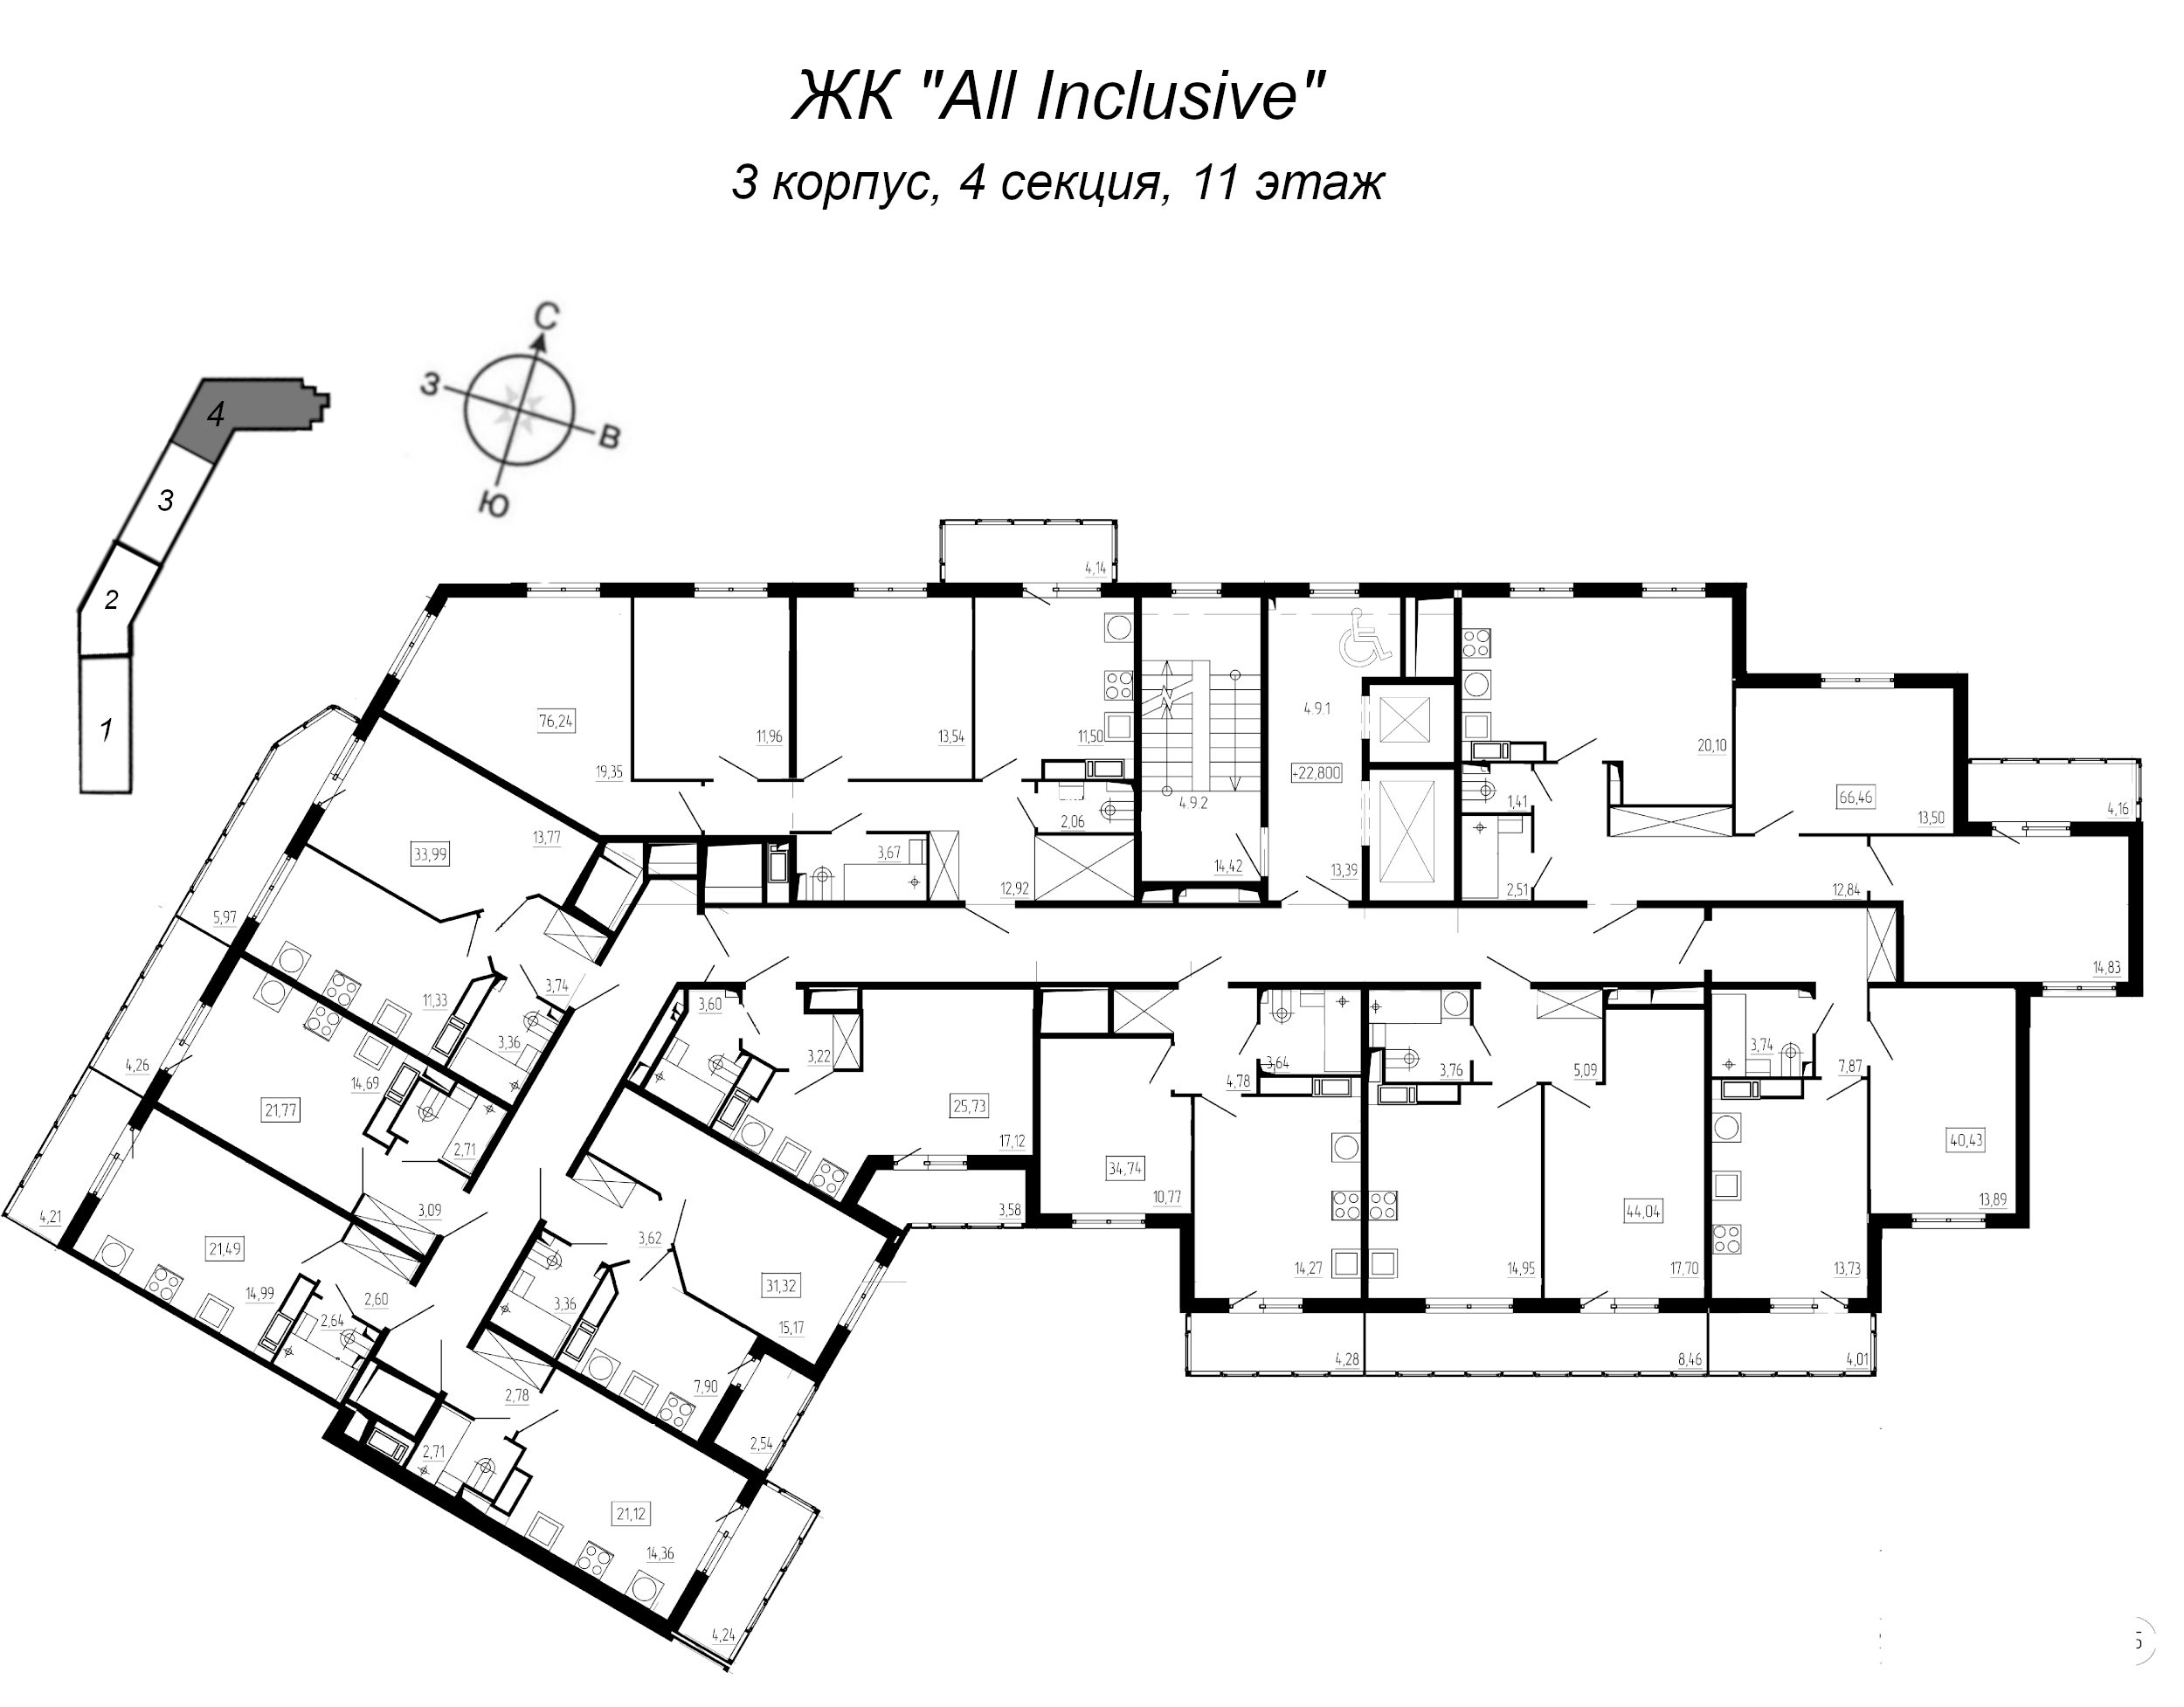 3-комнатная квартира, 75.7 м² в ЖК "All Inclusive" - планировка этажа